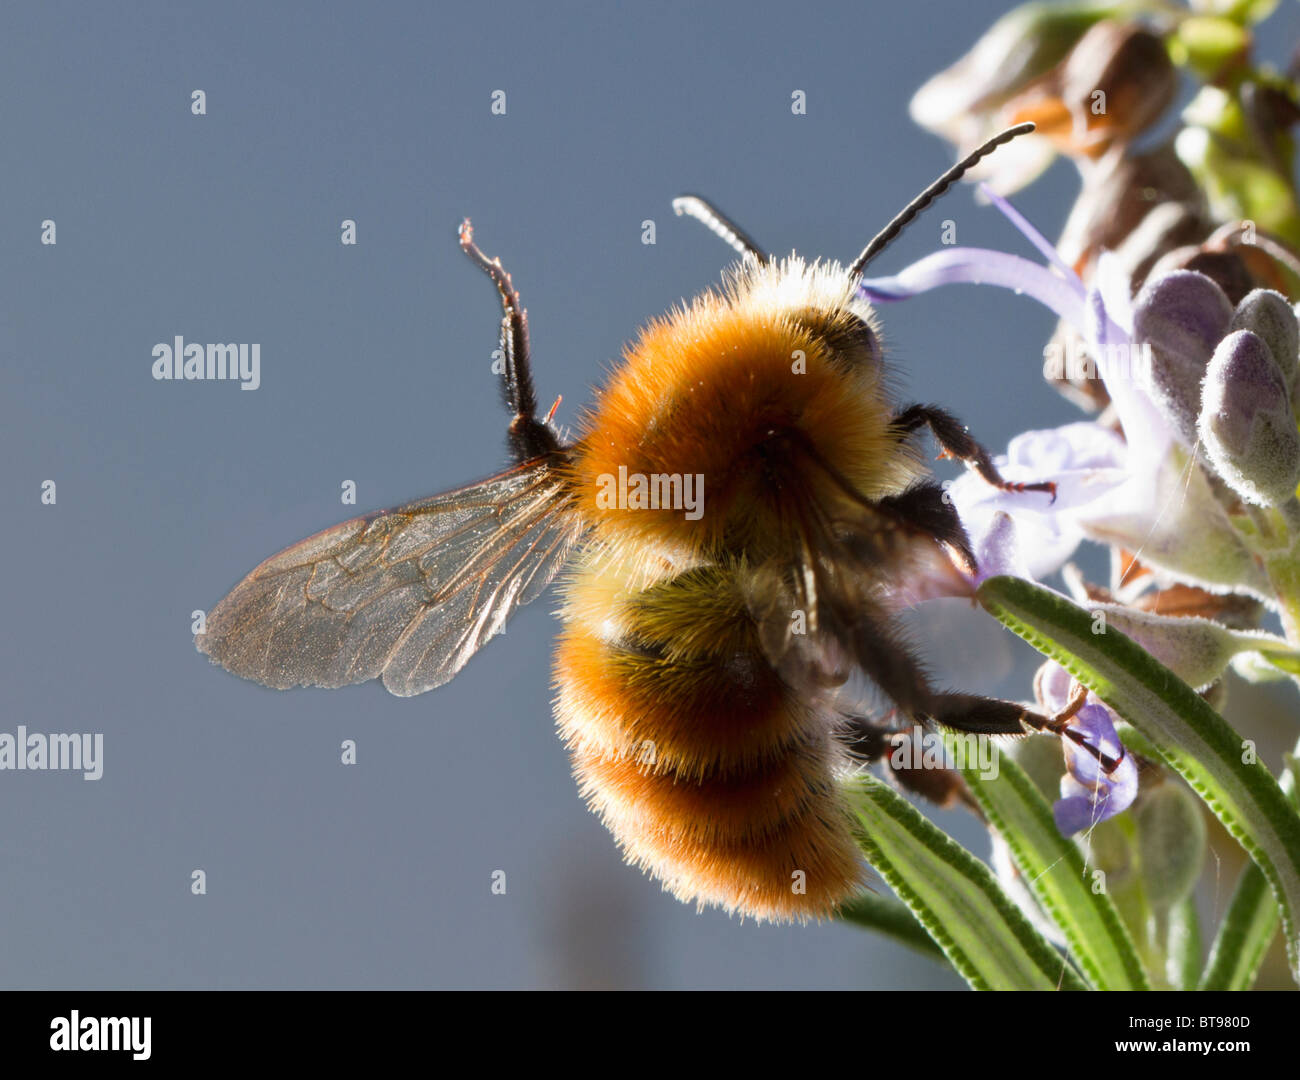 Orange Hummel (Bombus-Arten) auf Rosmarin-Blume Stockfoto